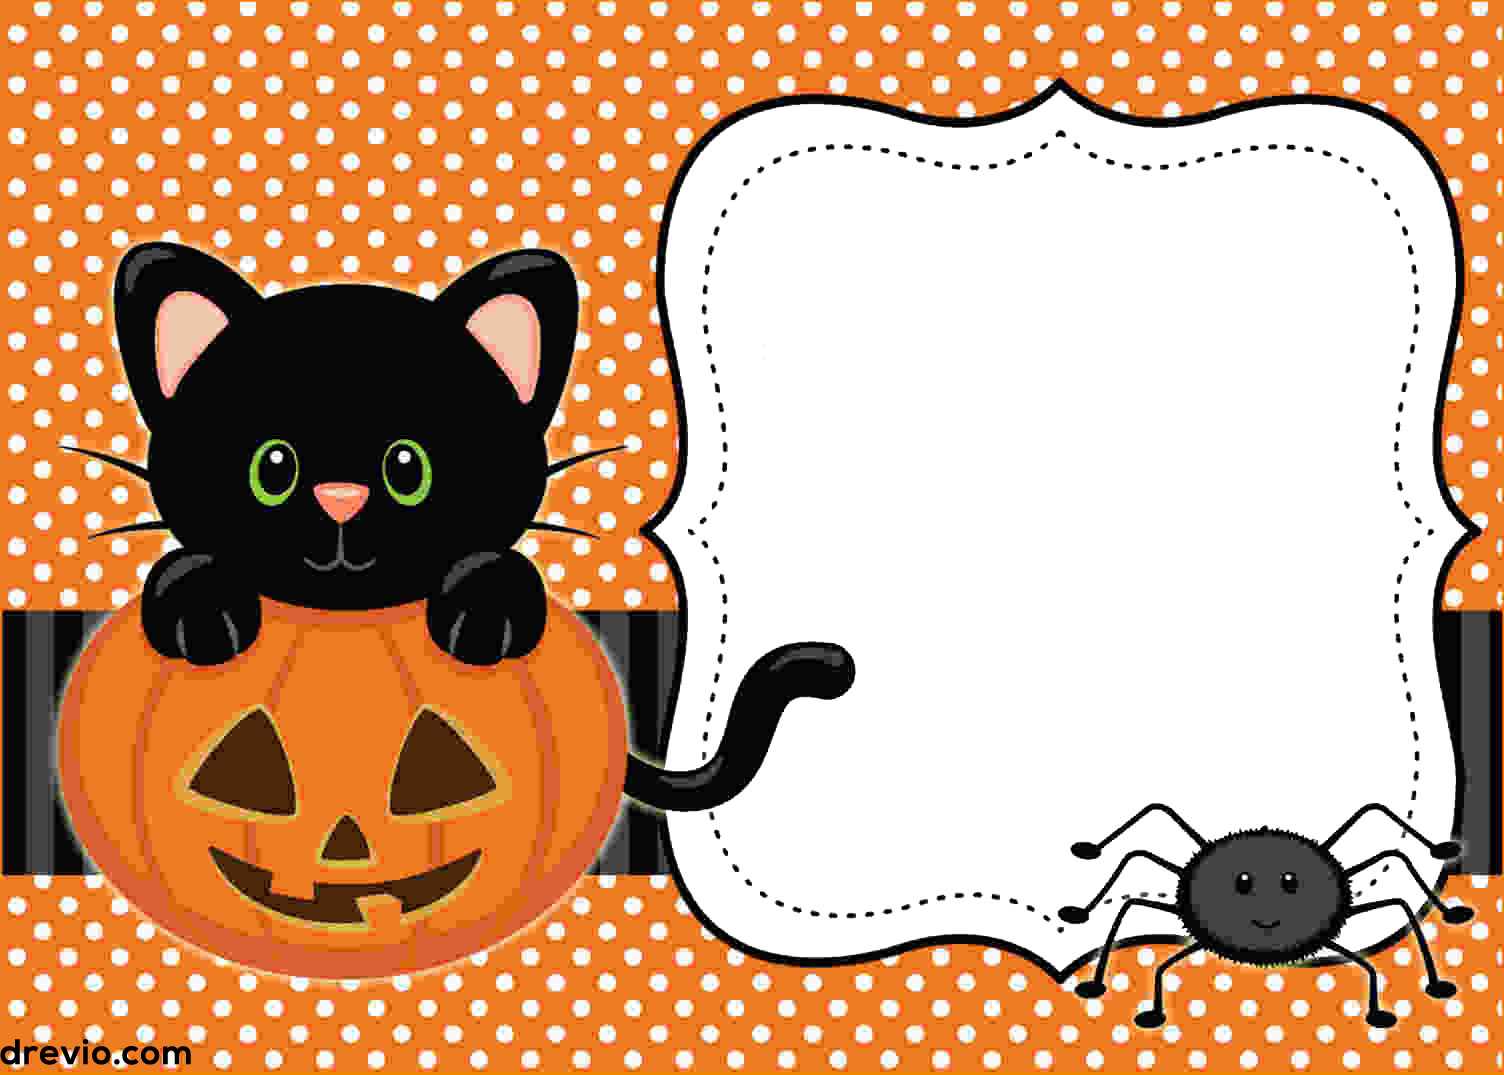 Free Printable Halloween Invitations Templates | Drevio With Free Halloween Templates For Word